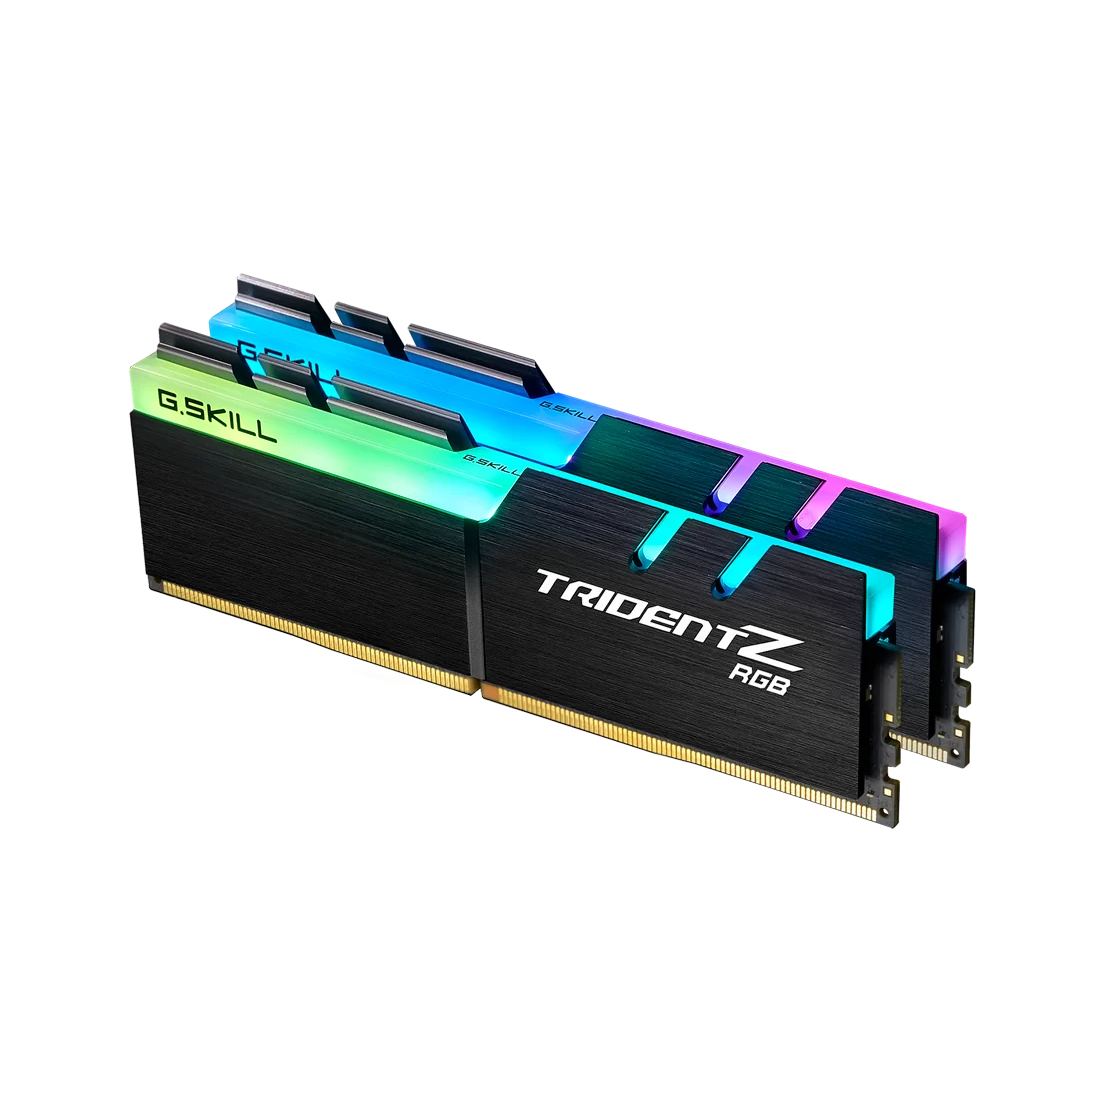 G.Skill Trident Z RGB 16GB DDR4 3200MHz Desktop RAM